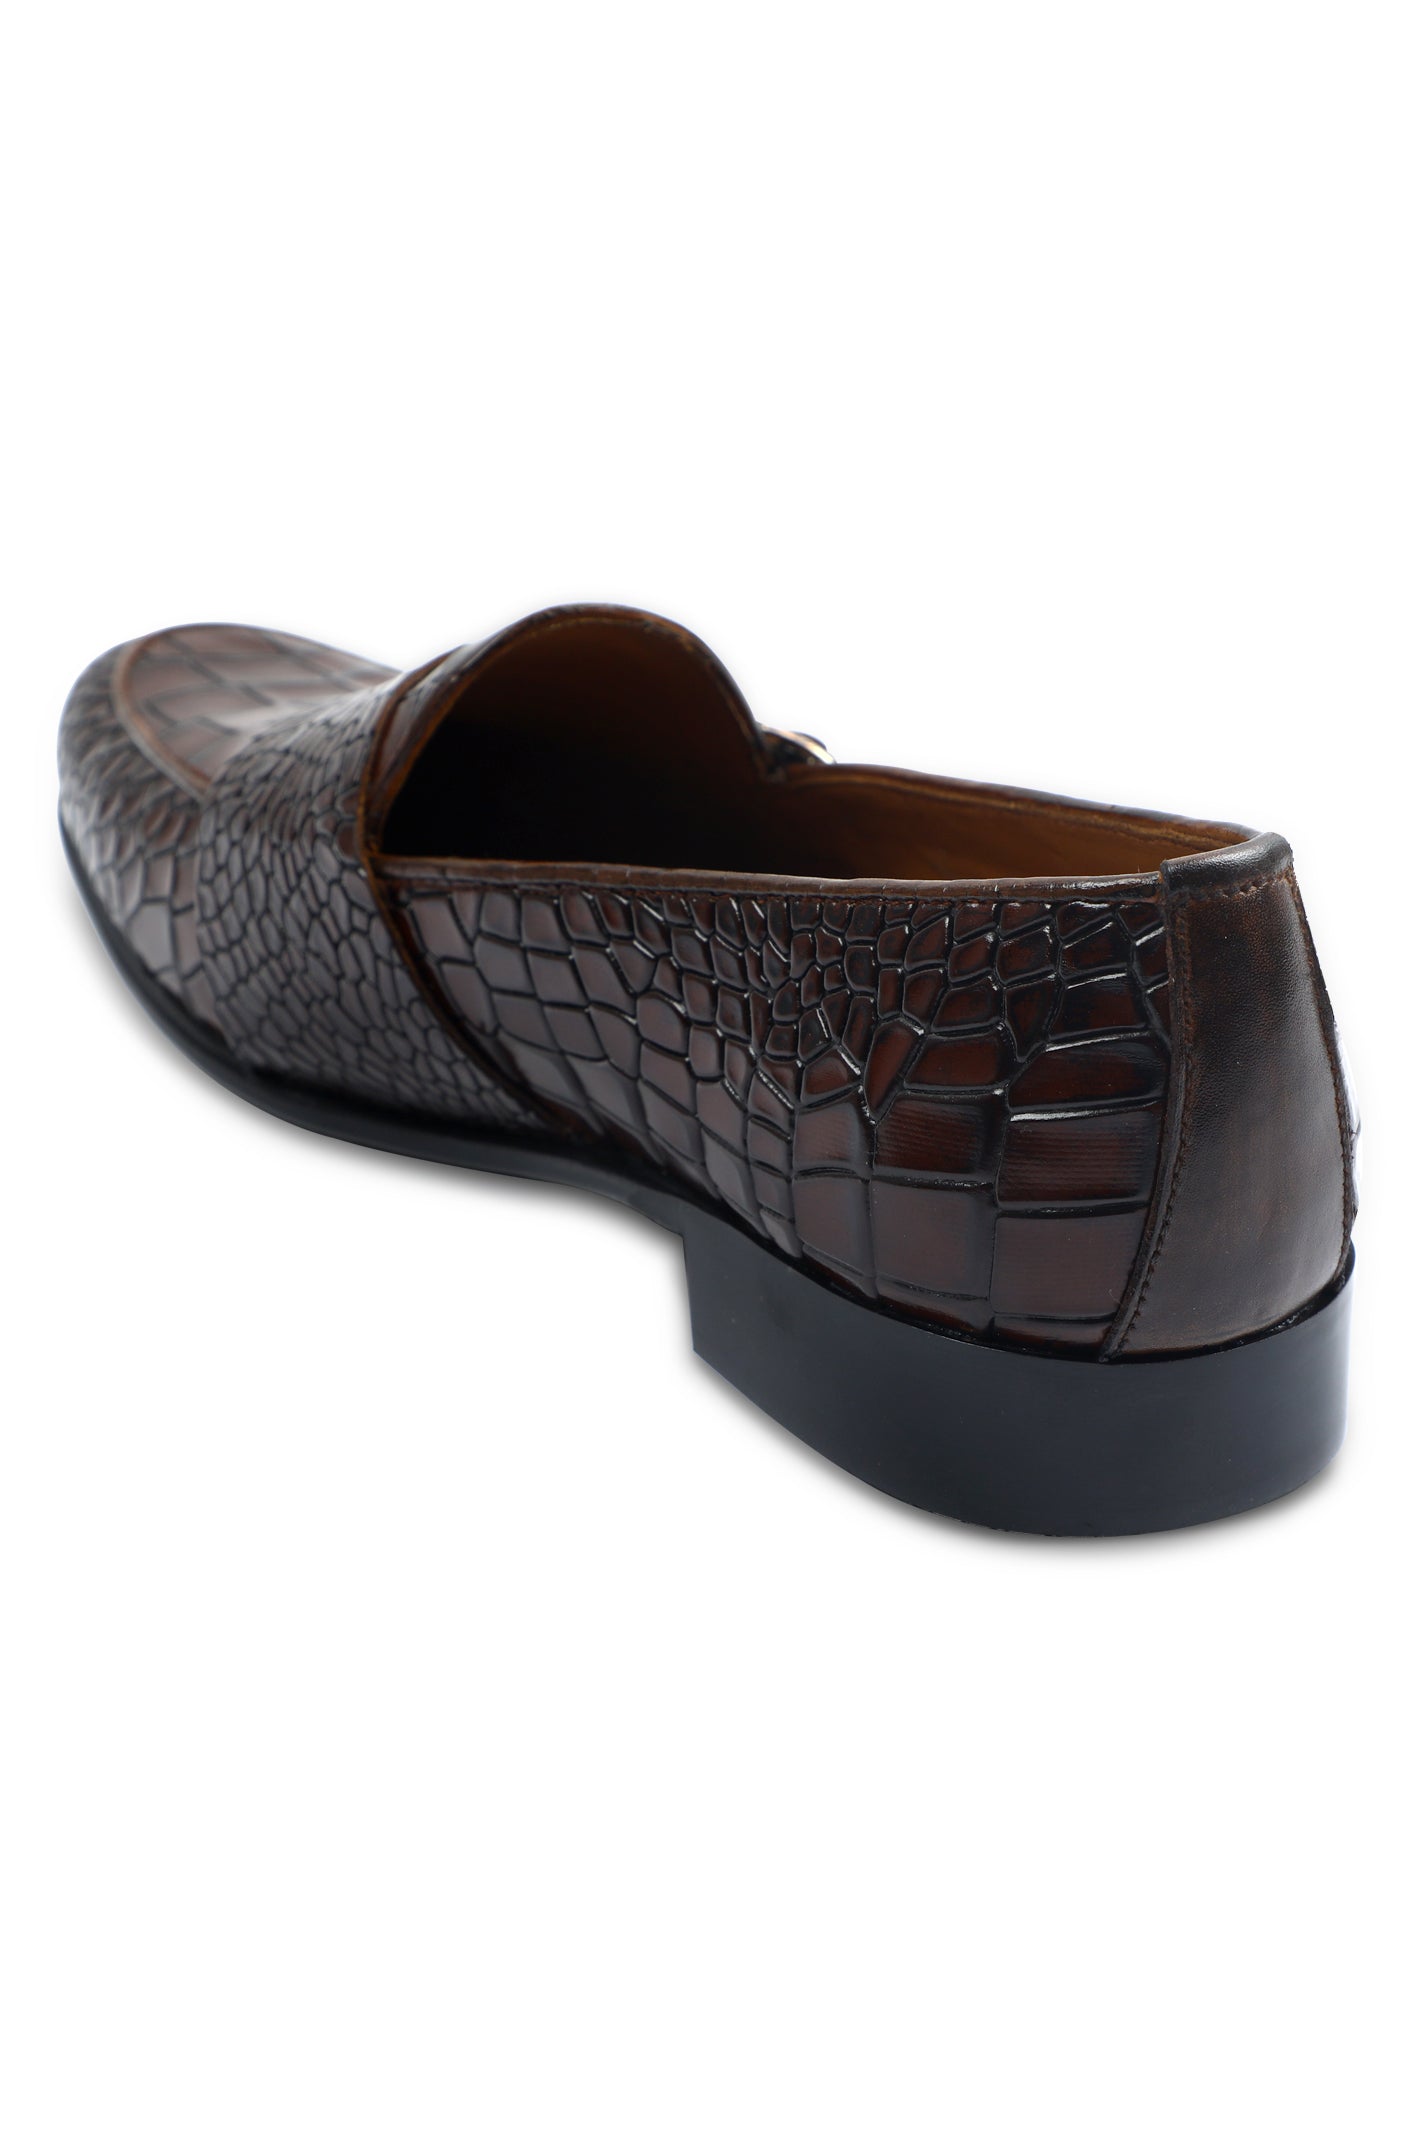 Formal Shoes For Men in Brown SKU: SMF-0157-BROWN - Diners